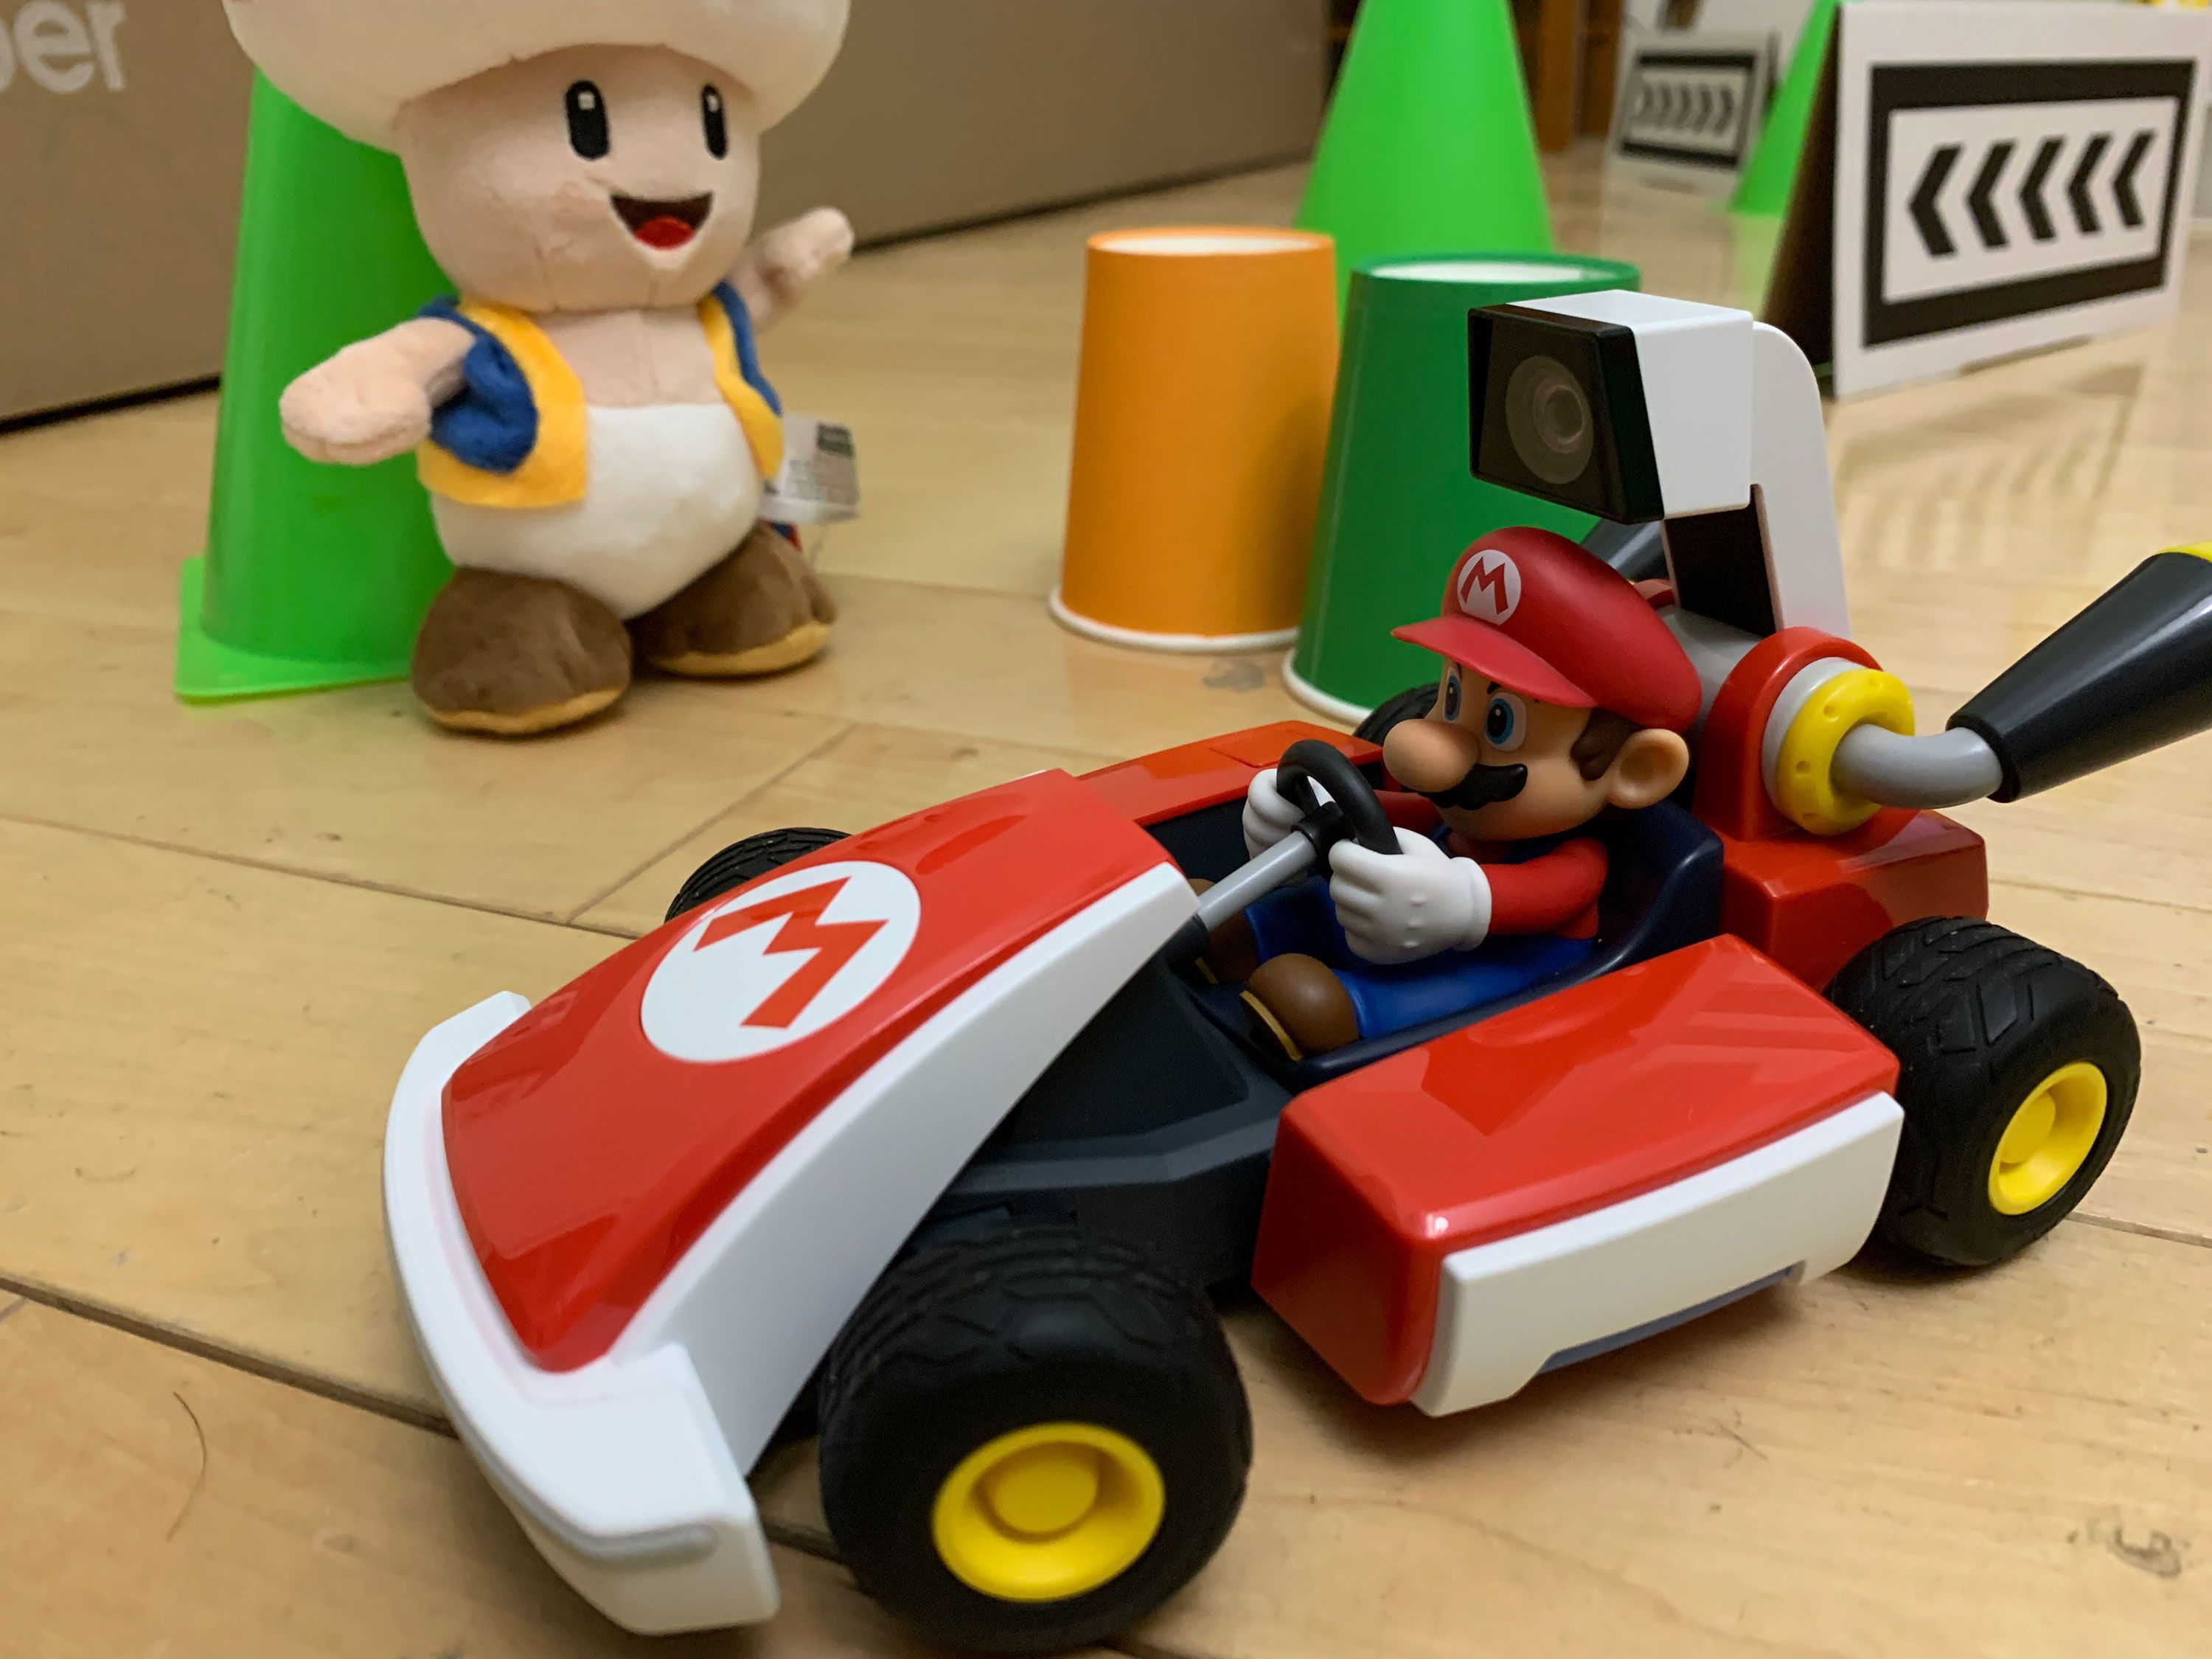 Mario Kart Live Home Circuit Gameplay Walkthrough Part 1 